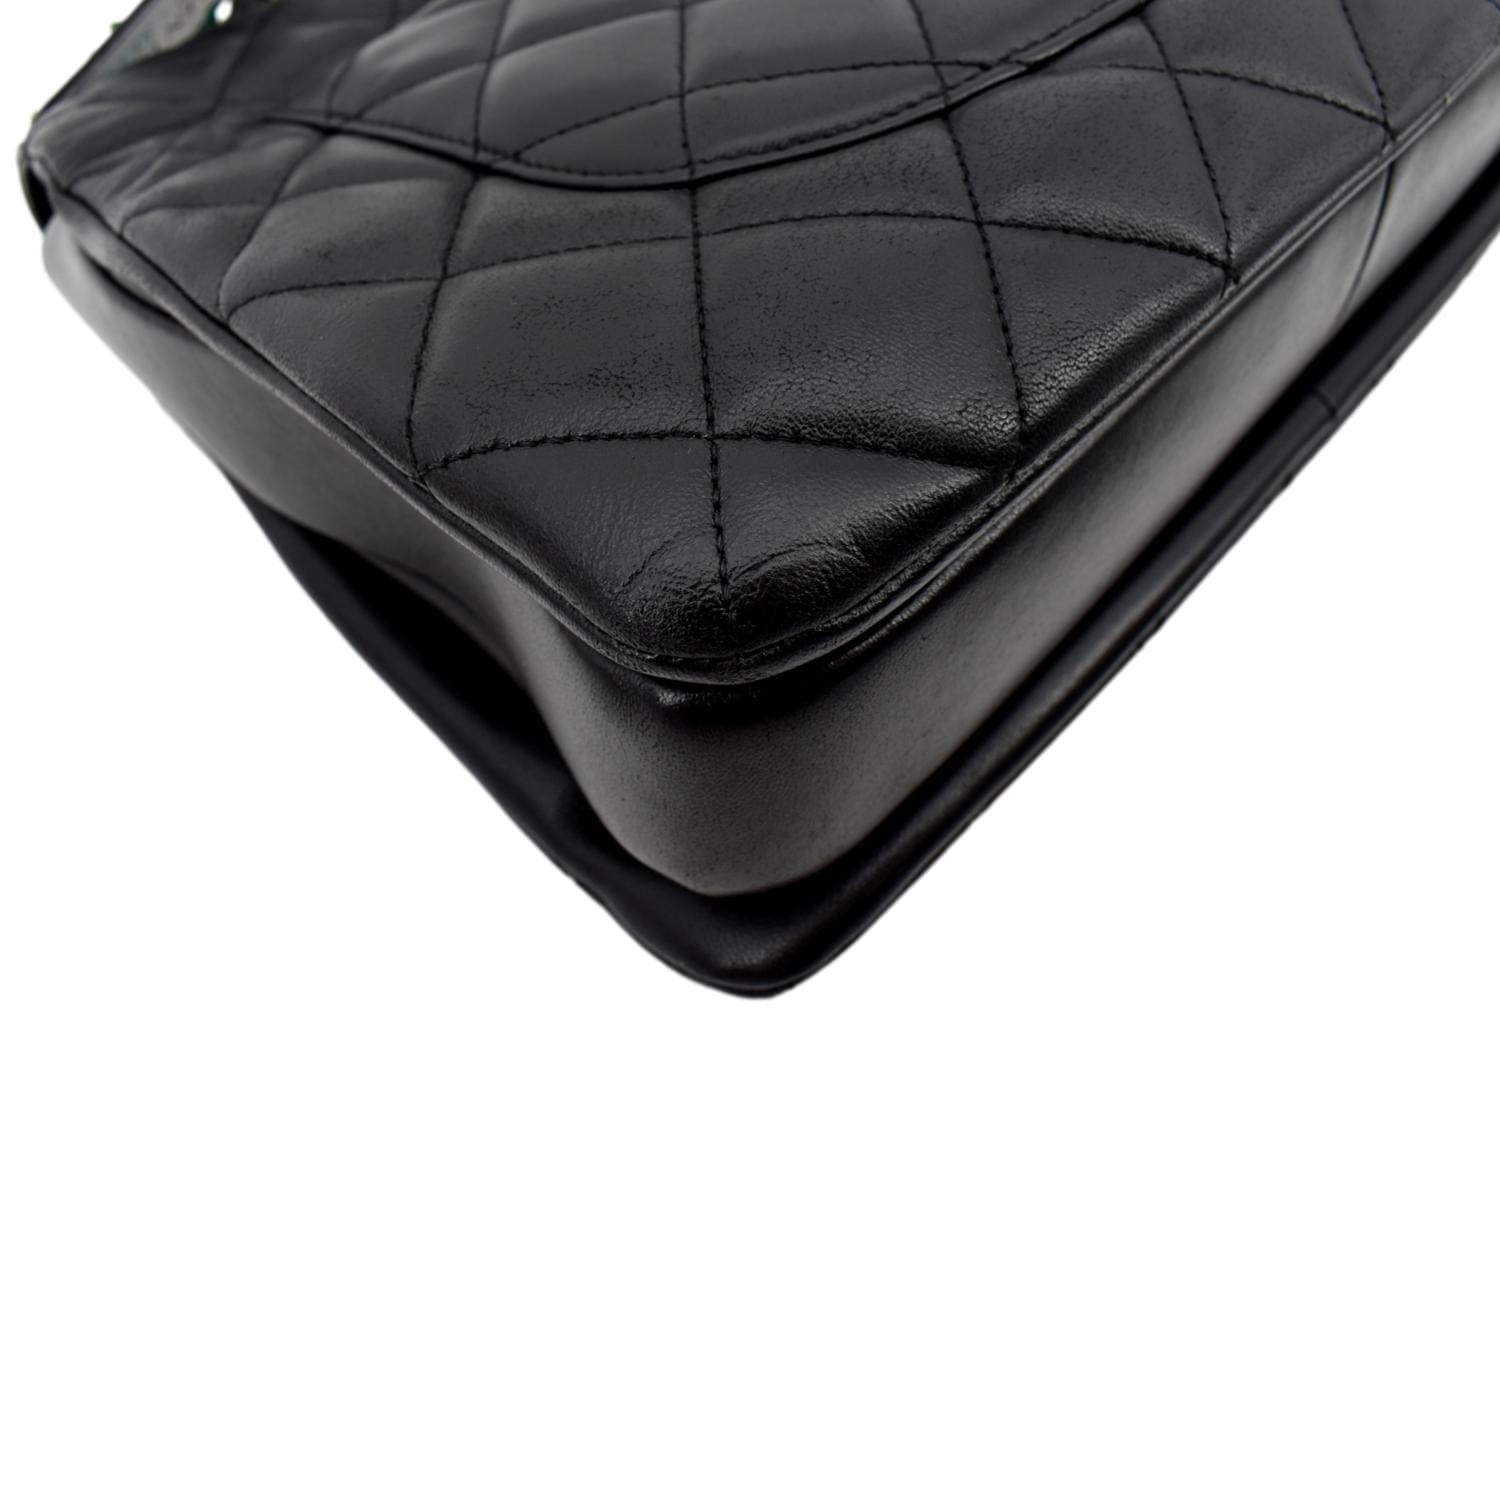 Chanel Trendy CC Flap Bag Top Handle Dark Grey — Blaise Ruby Loves